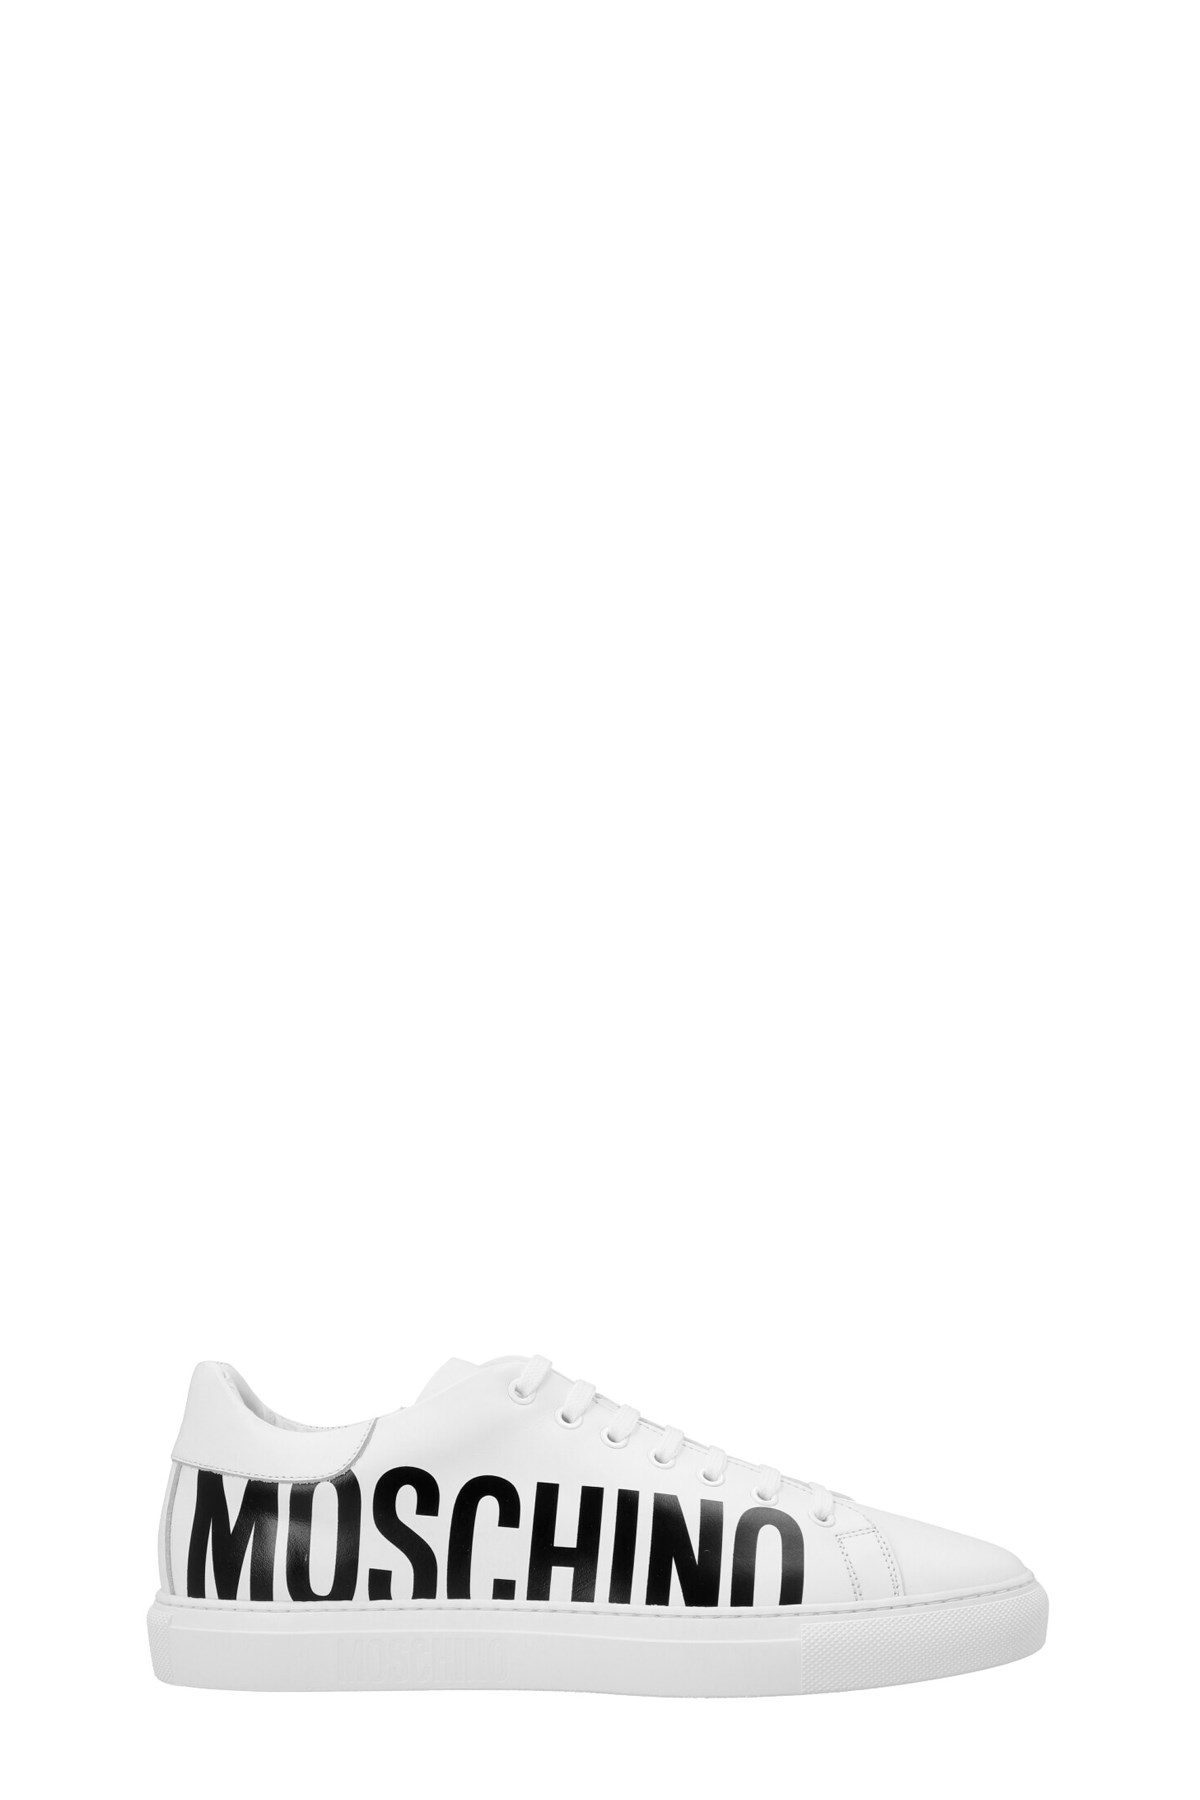 MOSCHINO Logo Print Sneakers